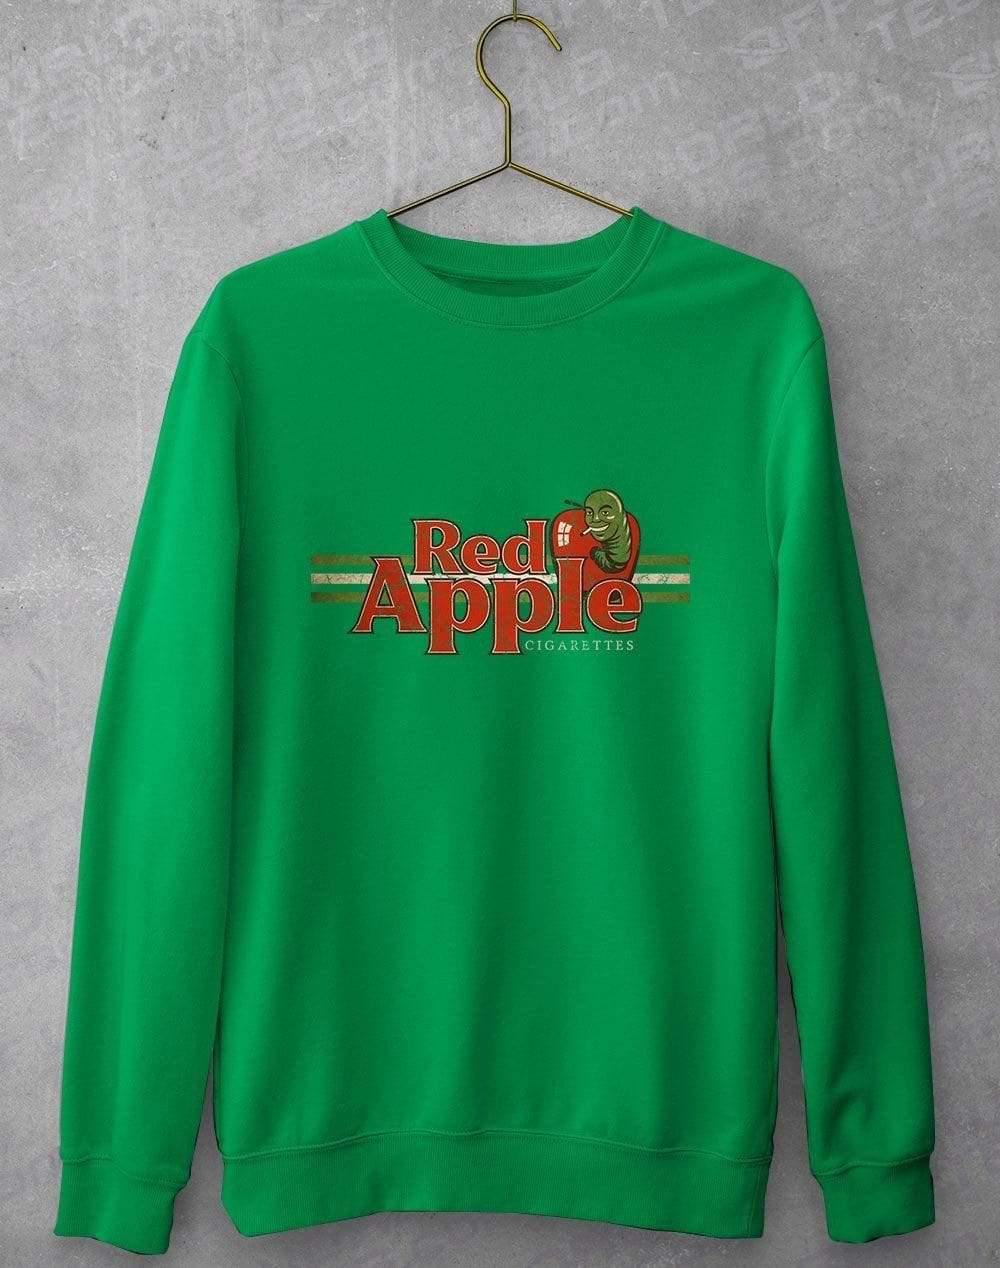 Red Apple Cigarettes Sweatshirt S / Irish  - Off World Tees